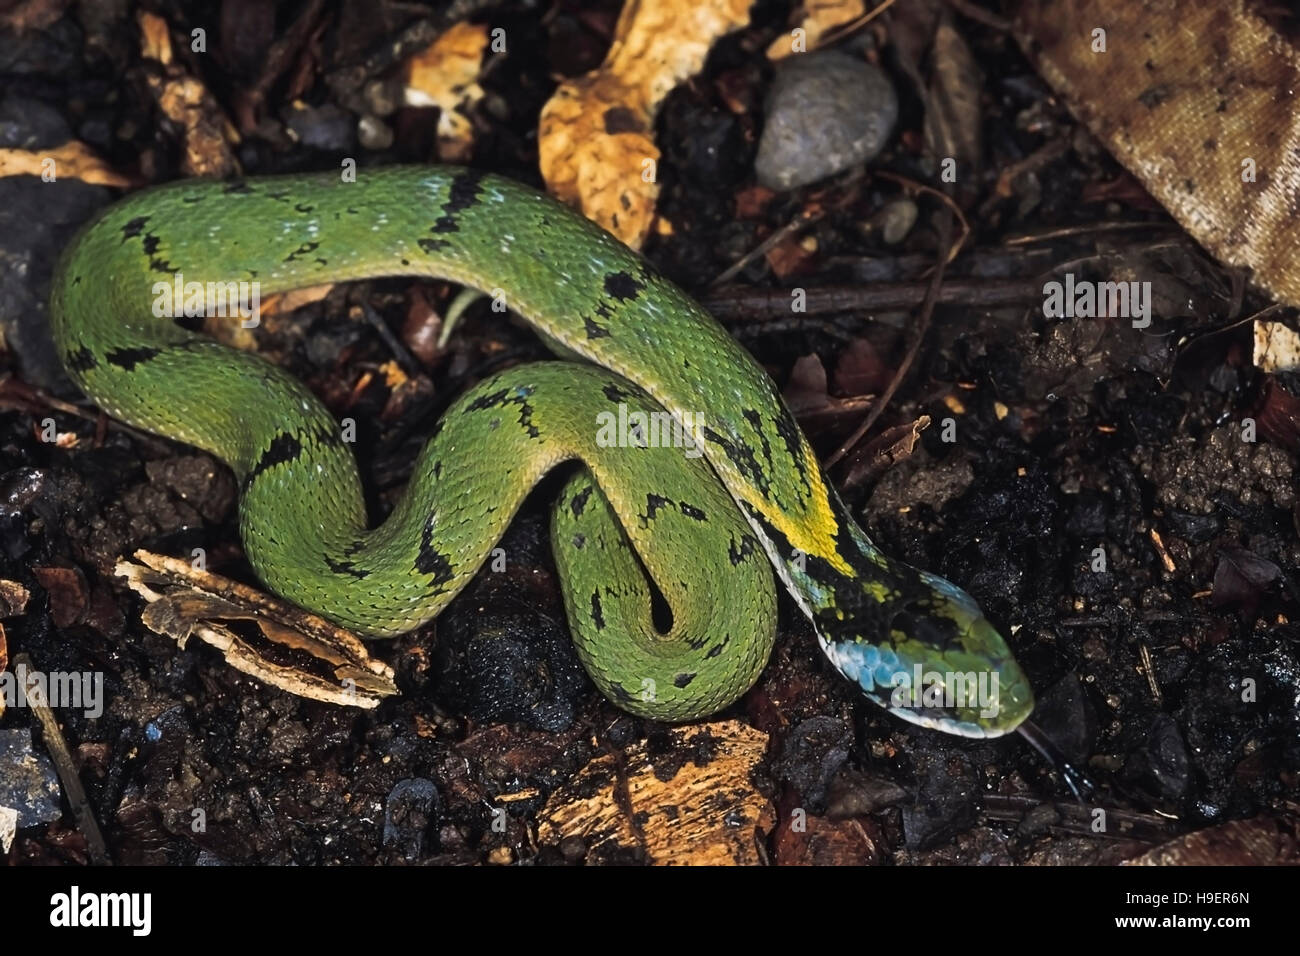 Macropisthodon Plumbicolor. Juvenile Grass snake. Non venomous. Pune, Maharashtra, India. Stock Photo